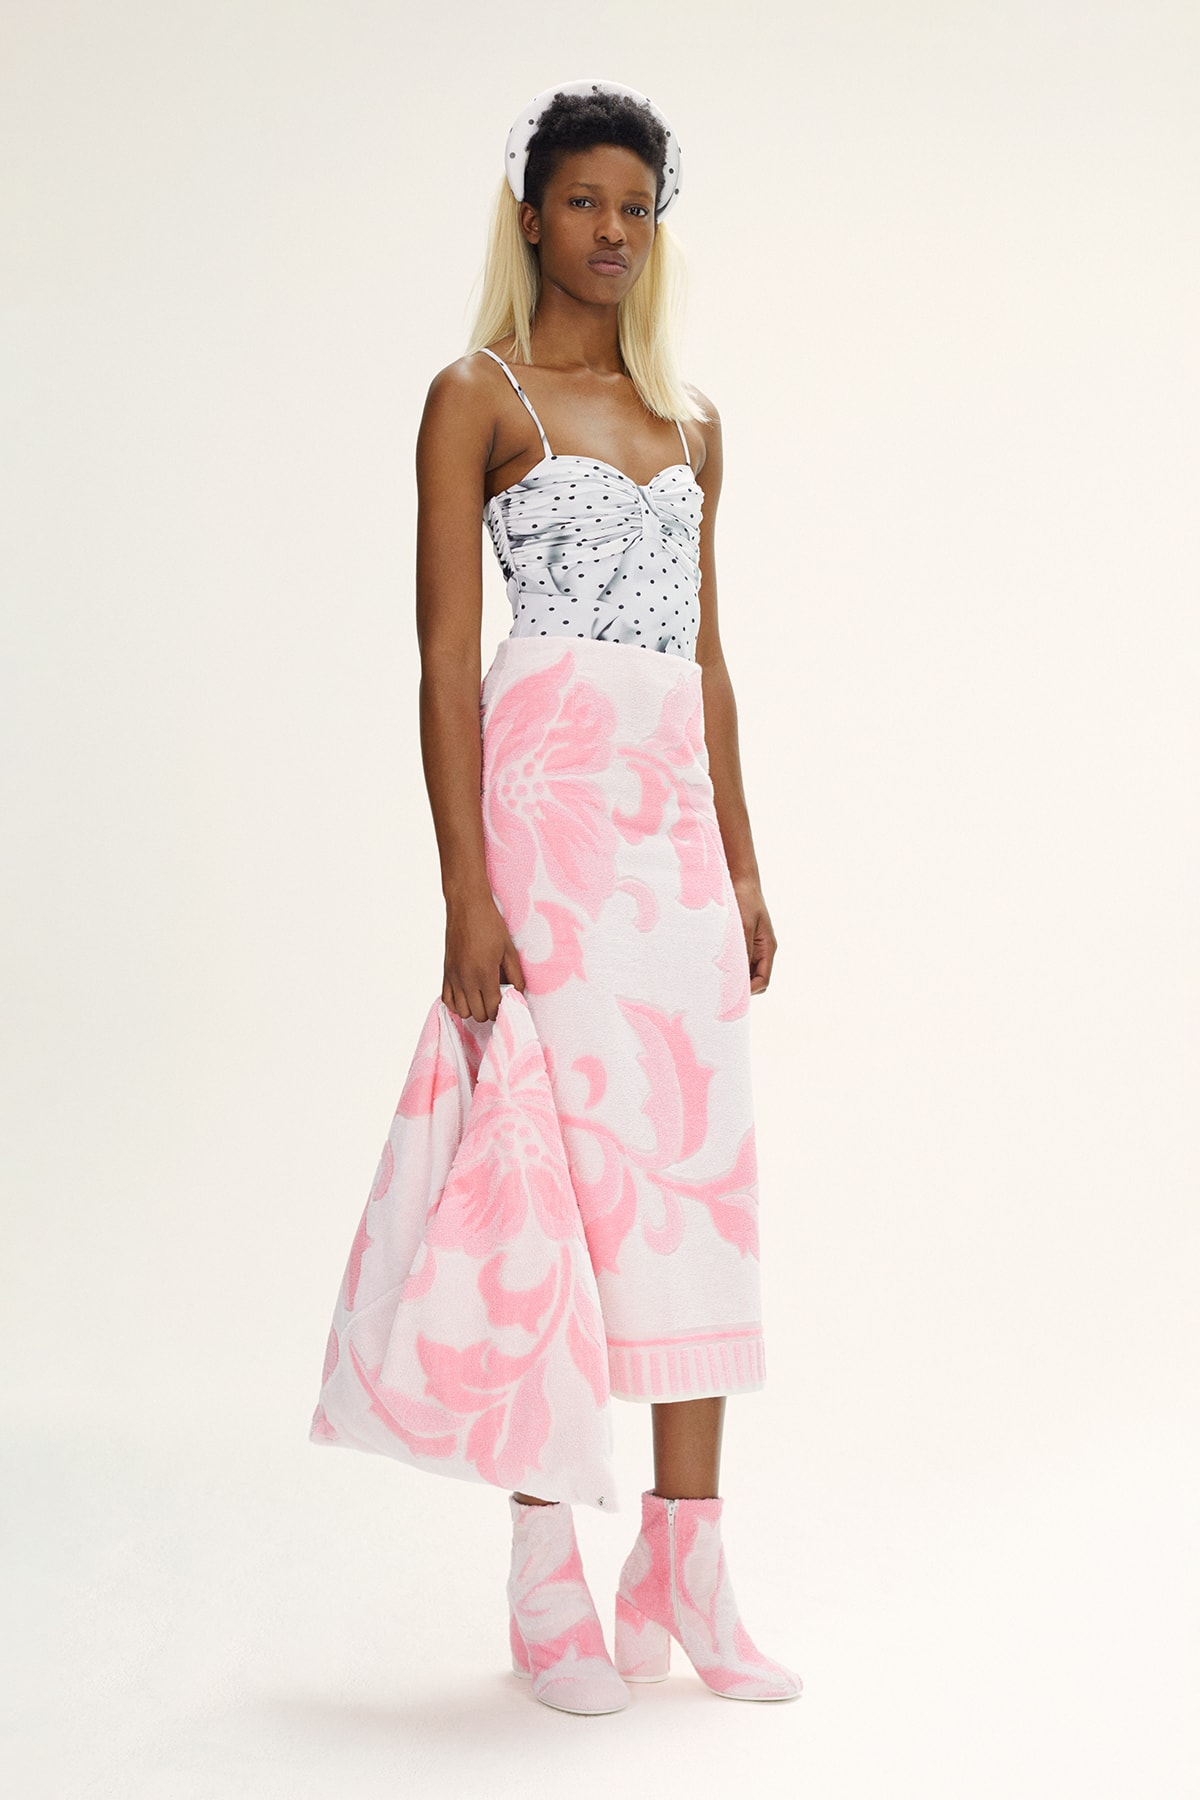 MM6 Maison Margiela Spring/Summer 2020 Collection Lookbook Towel Skirt Floral Pink